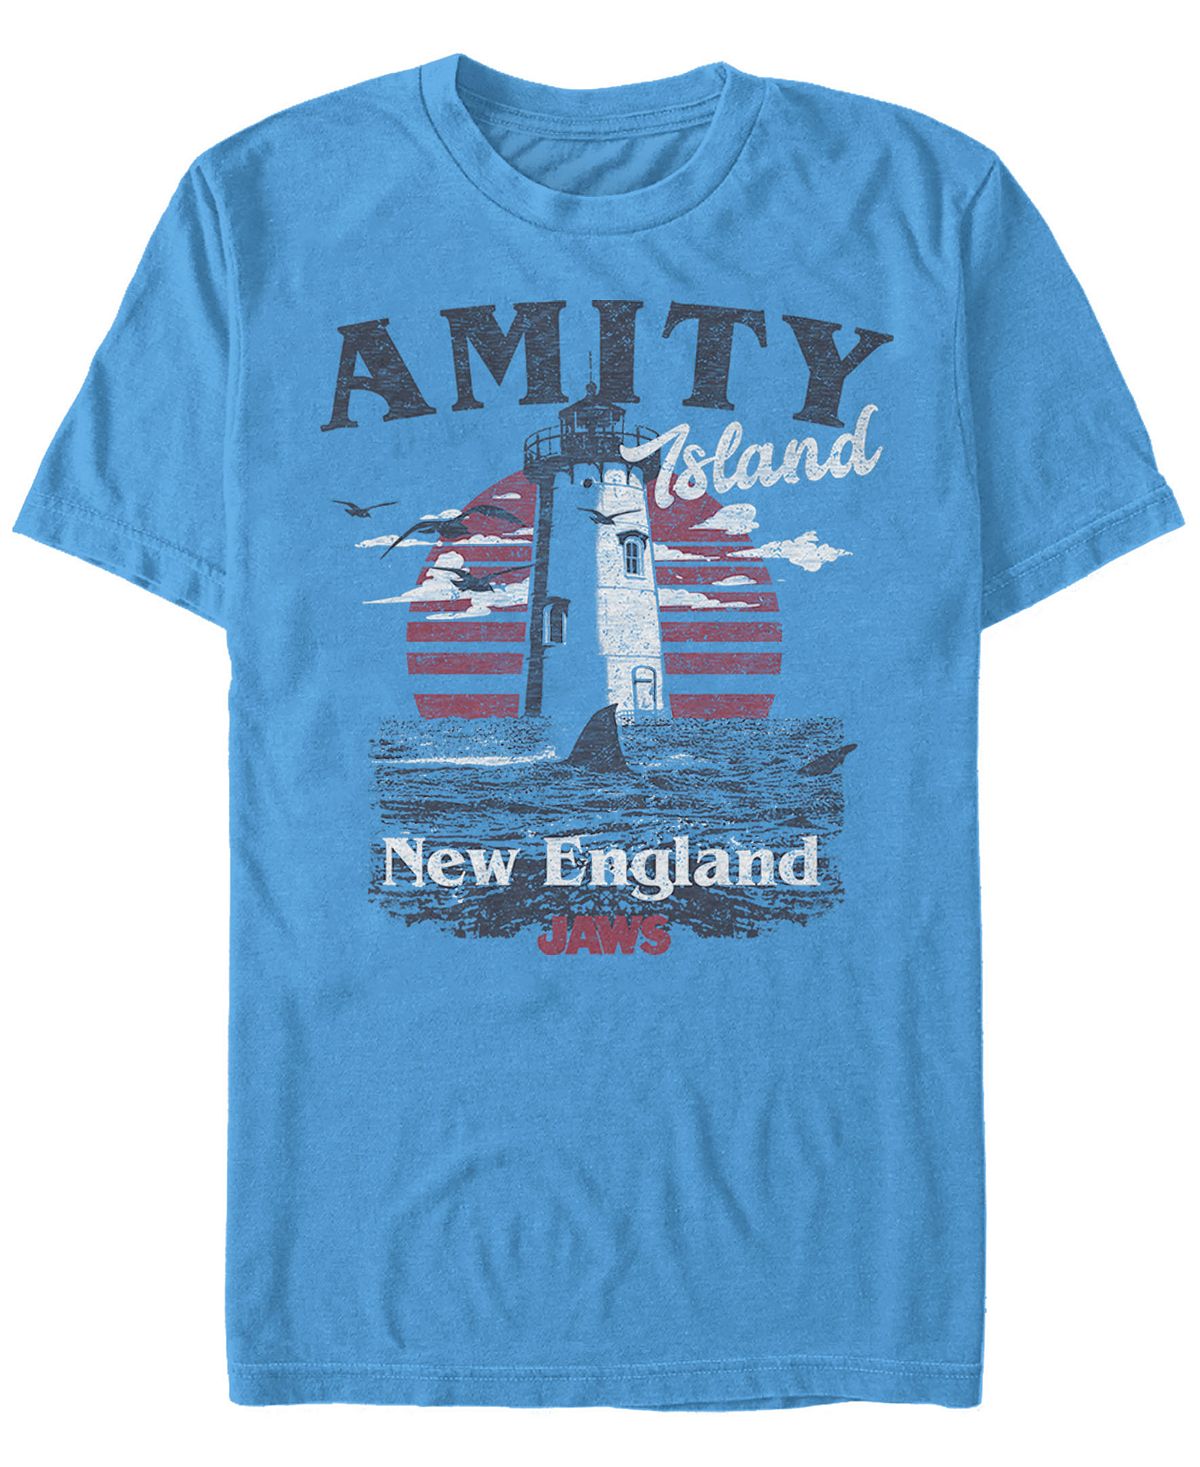 Мужская футболка с коротким рукавом amity island destination jaws Fifth Sun, светло-синий мэтт хупер с аквалангом челюсти фигурка 20см matt hooper shark cage jaws